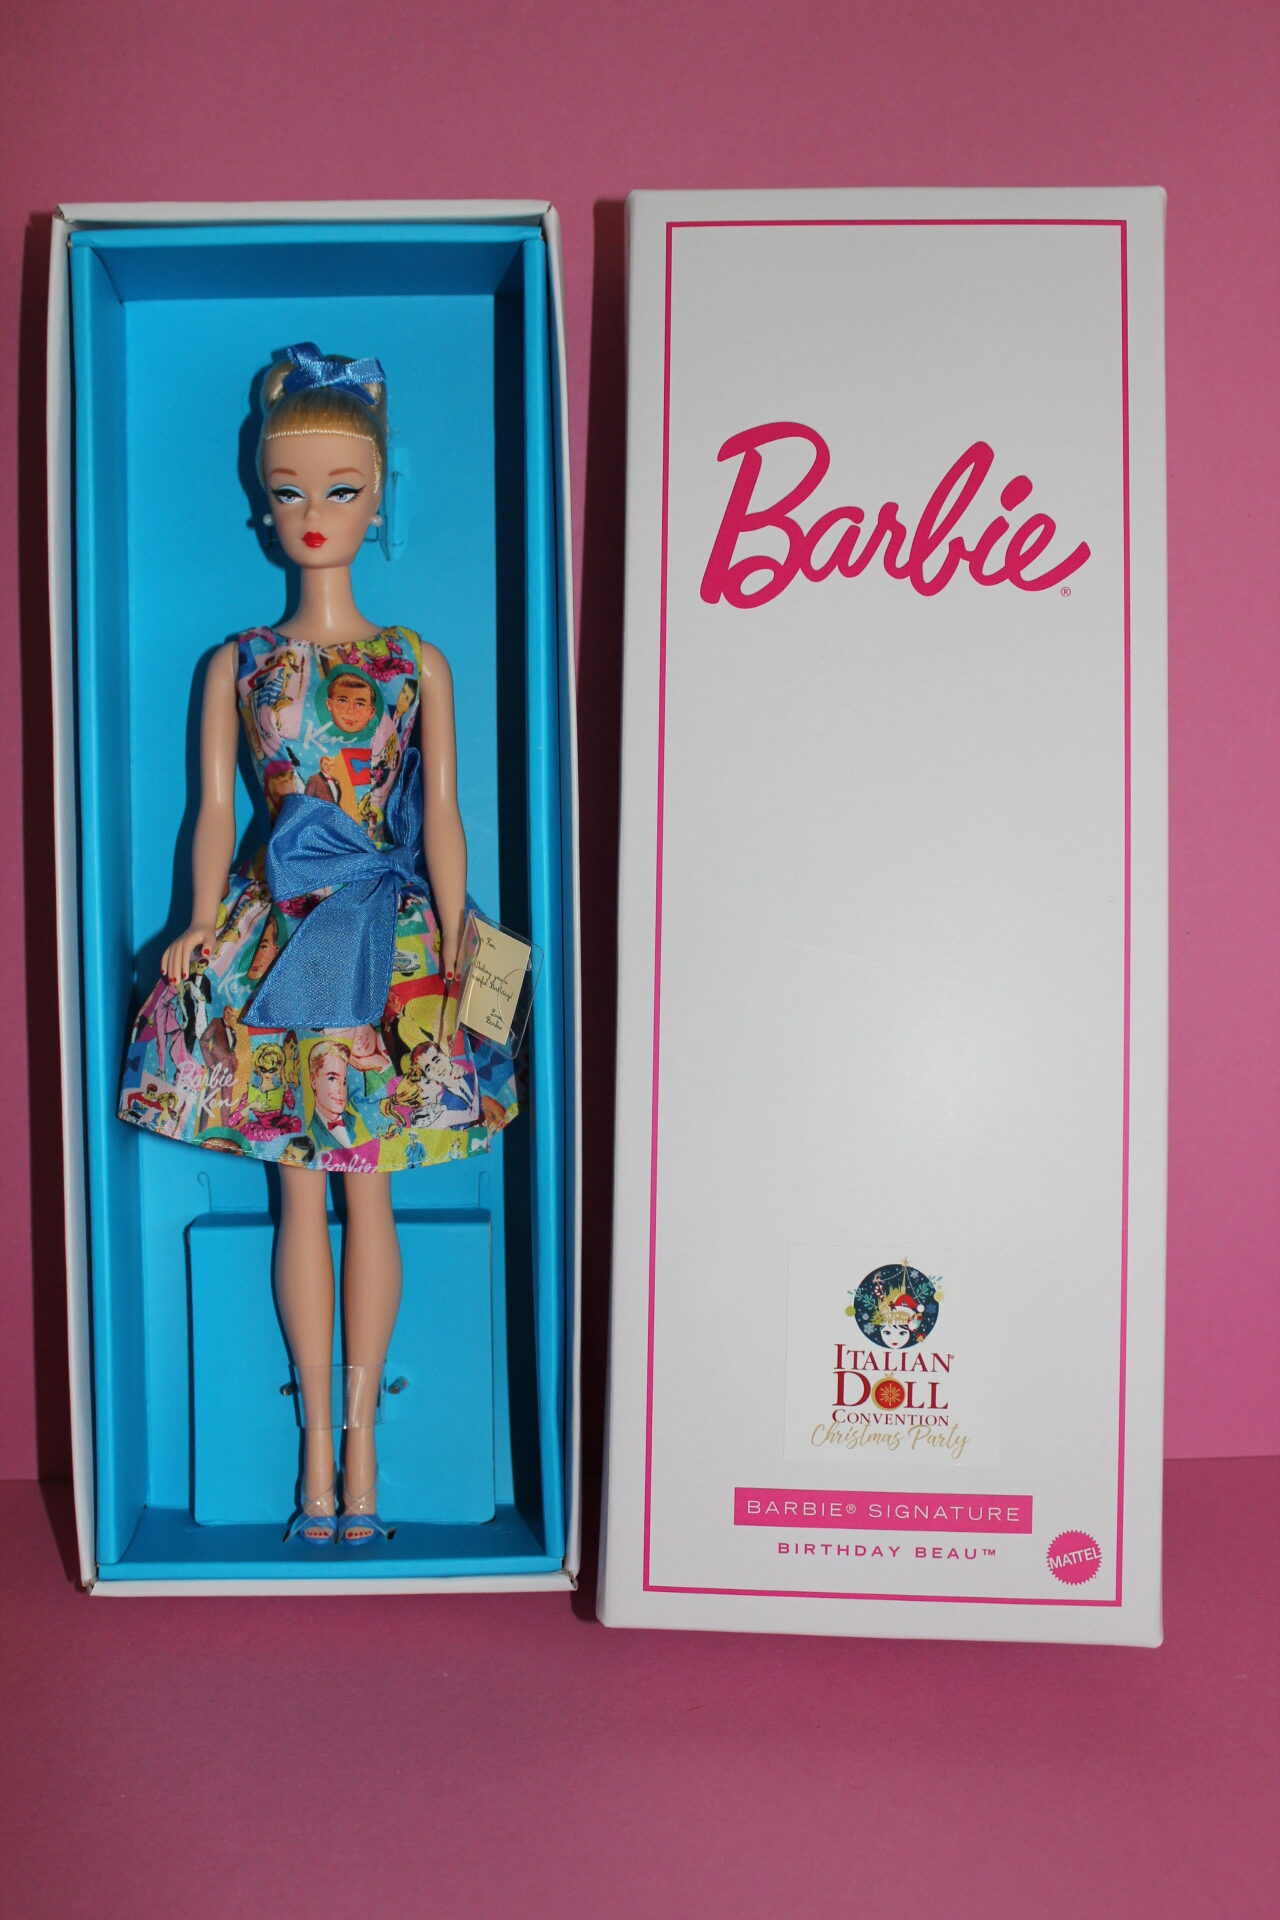 Collector Barbie Italian Doll Convention Birthday Beau NRFB 2021 Limited  Edition!!!